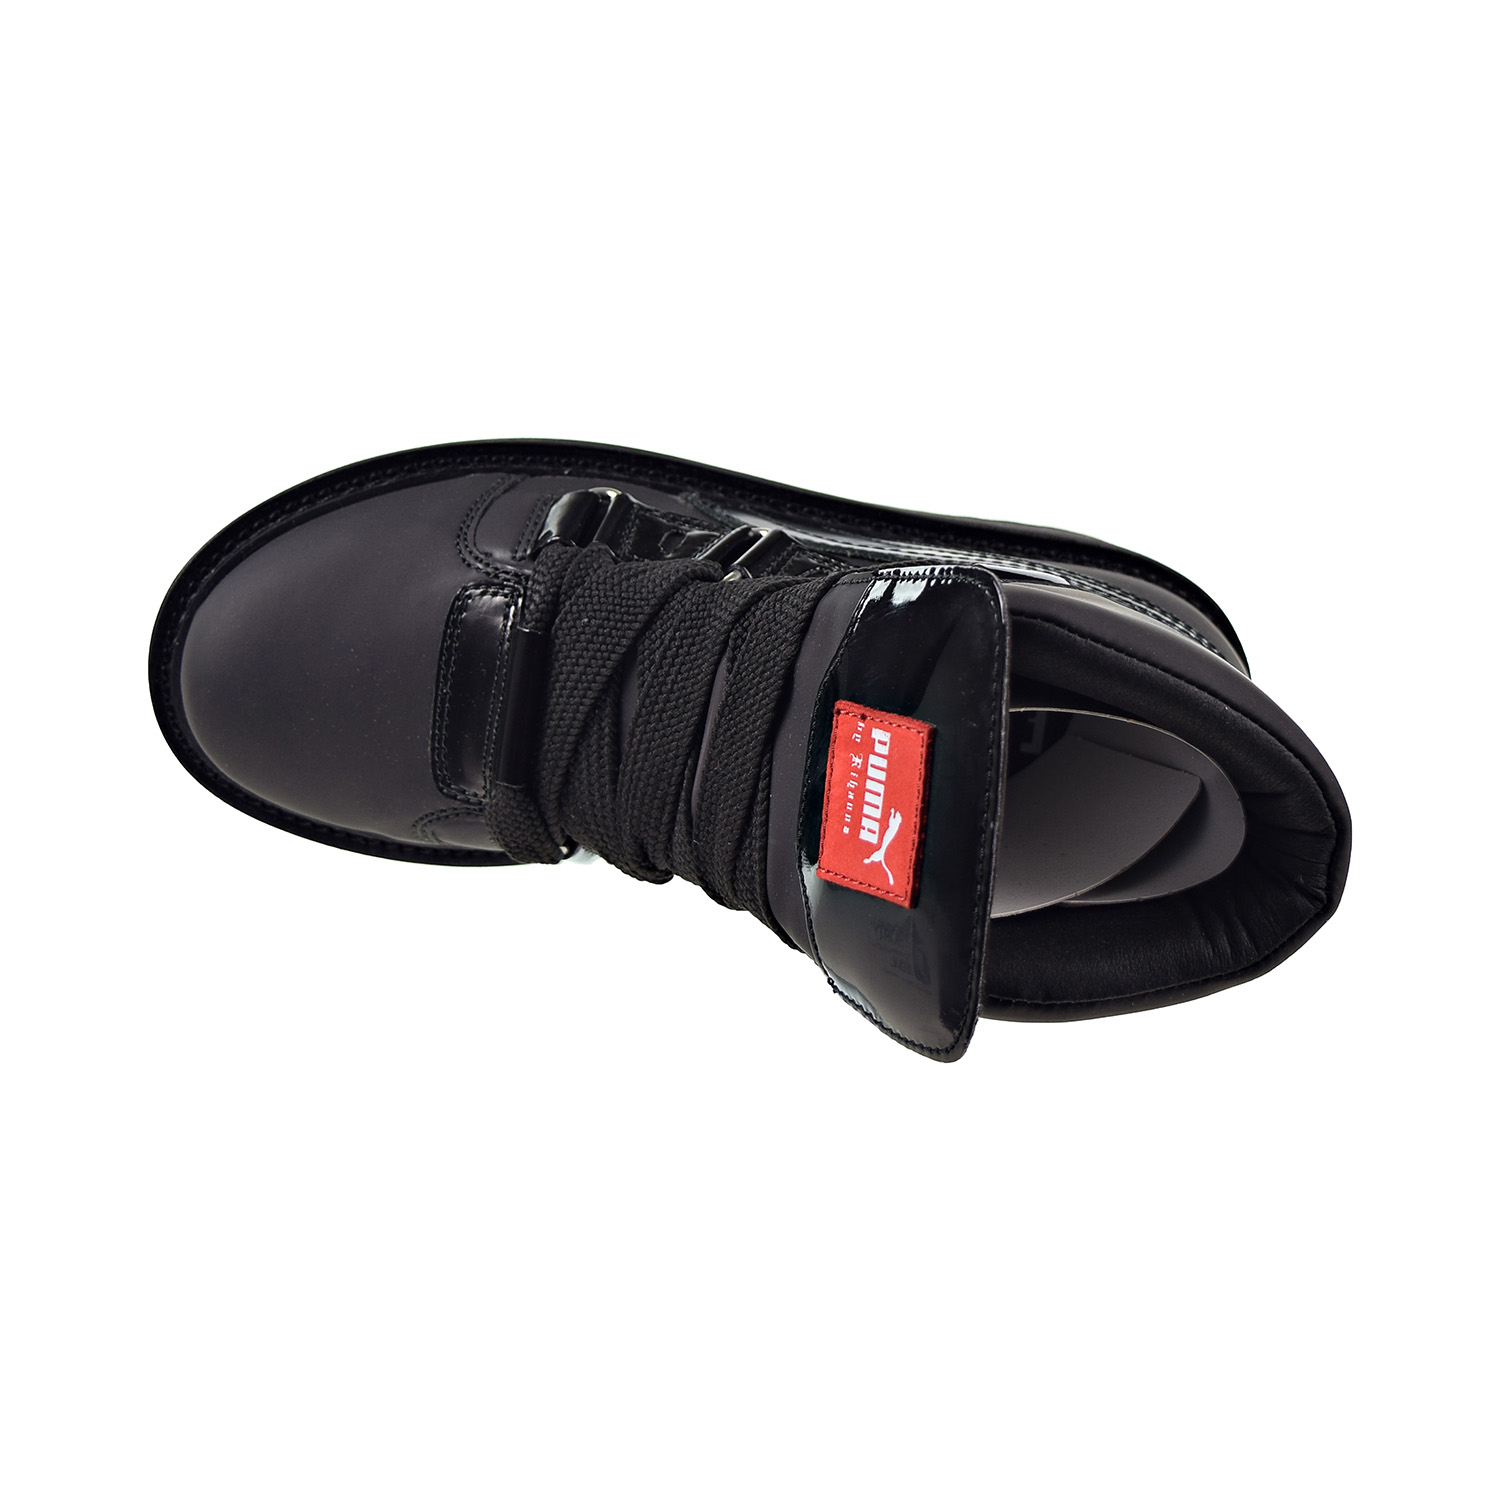 Puma Fenty By Rihanna Men's Platform Sneaker Boots Puma Black 363040-01 - image 5 of 6